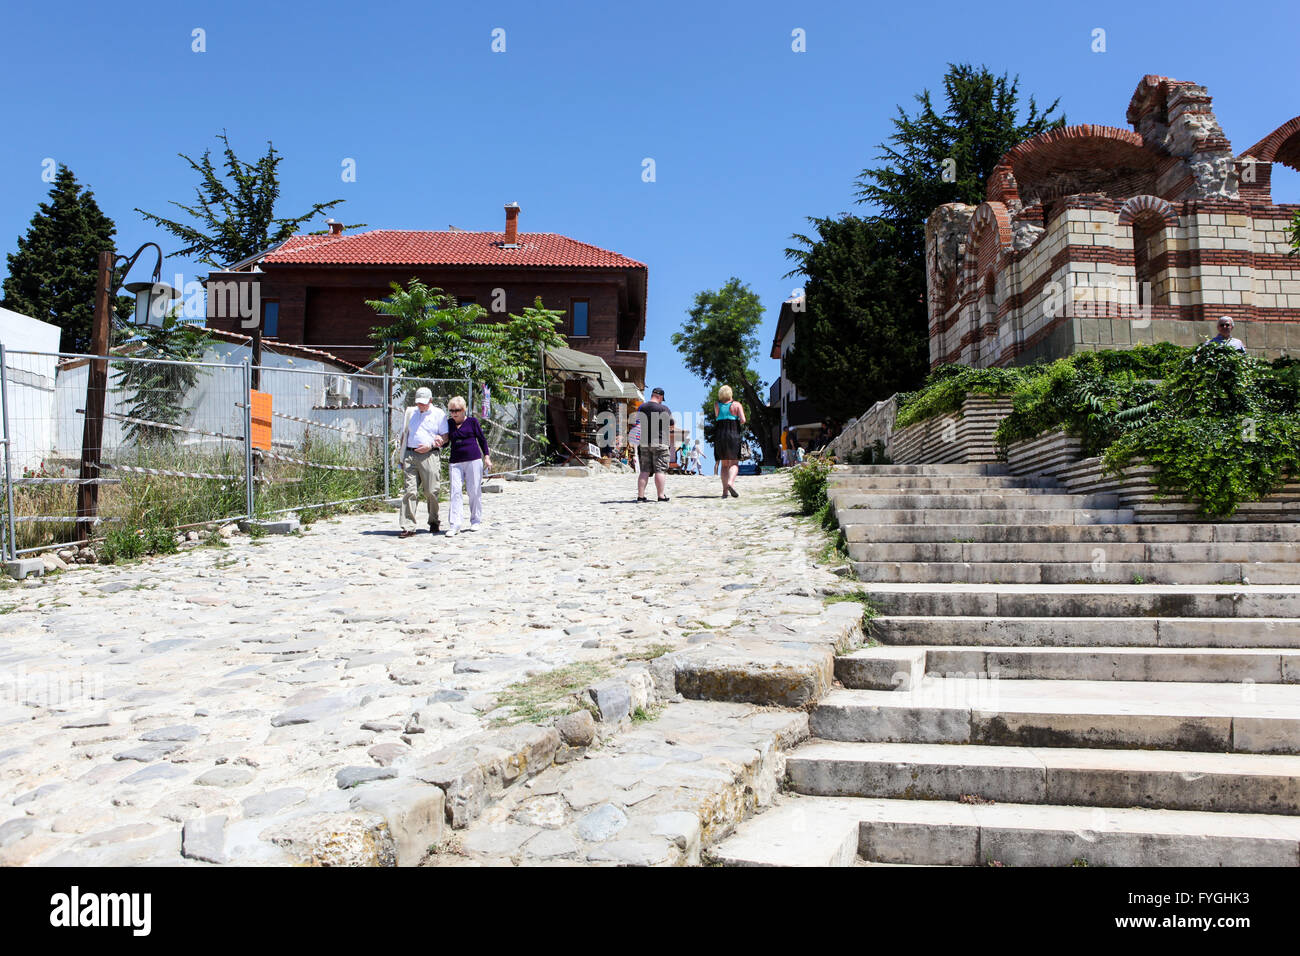 Nesebar, Bulgaria - 06/23/2013: People visit Old Town on June 23, 2013 day of Nessebar, Bulgaria. Nessebar in 1956 was declared Stock Photo